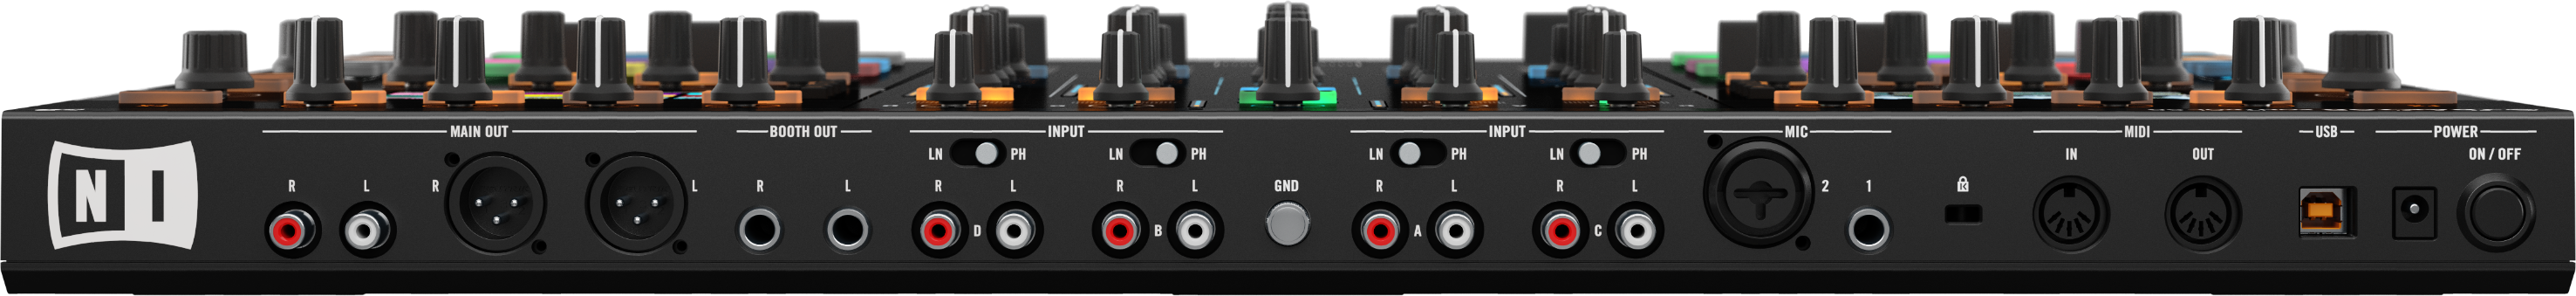 Native Instruments Traktor Kontrol S8 - USB DJ controller - Variation 2